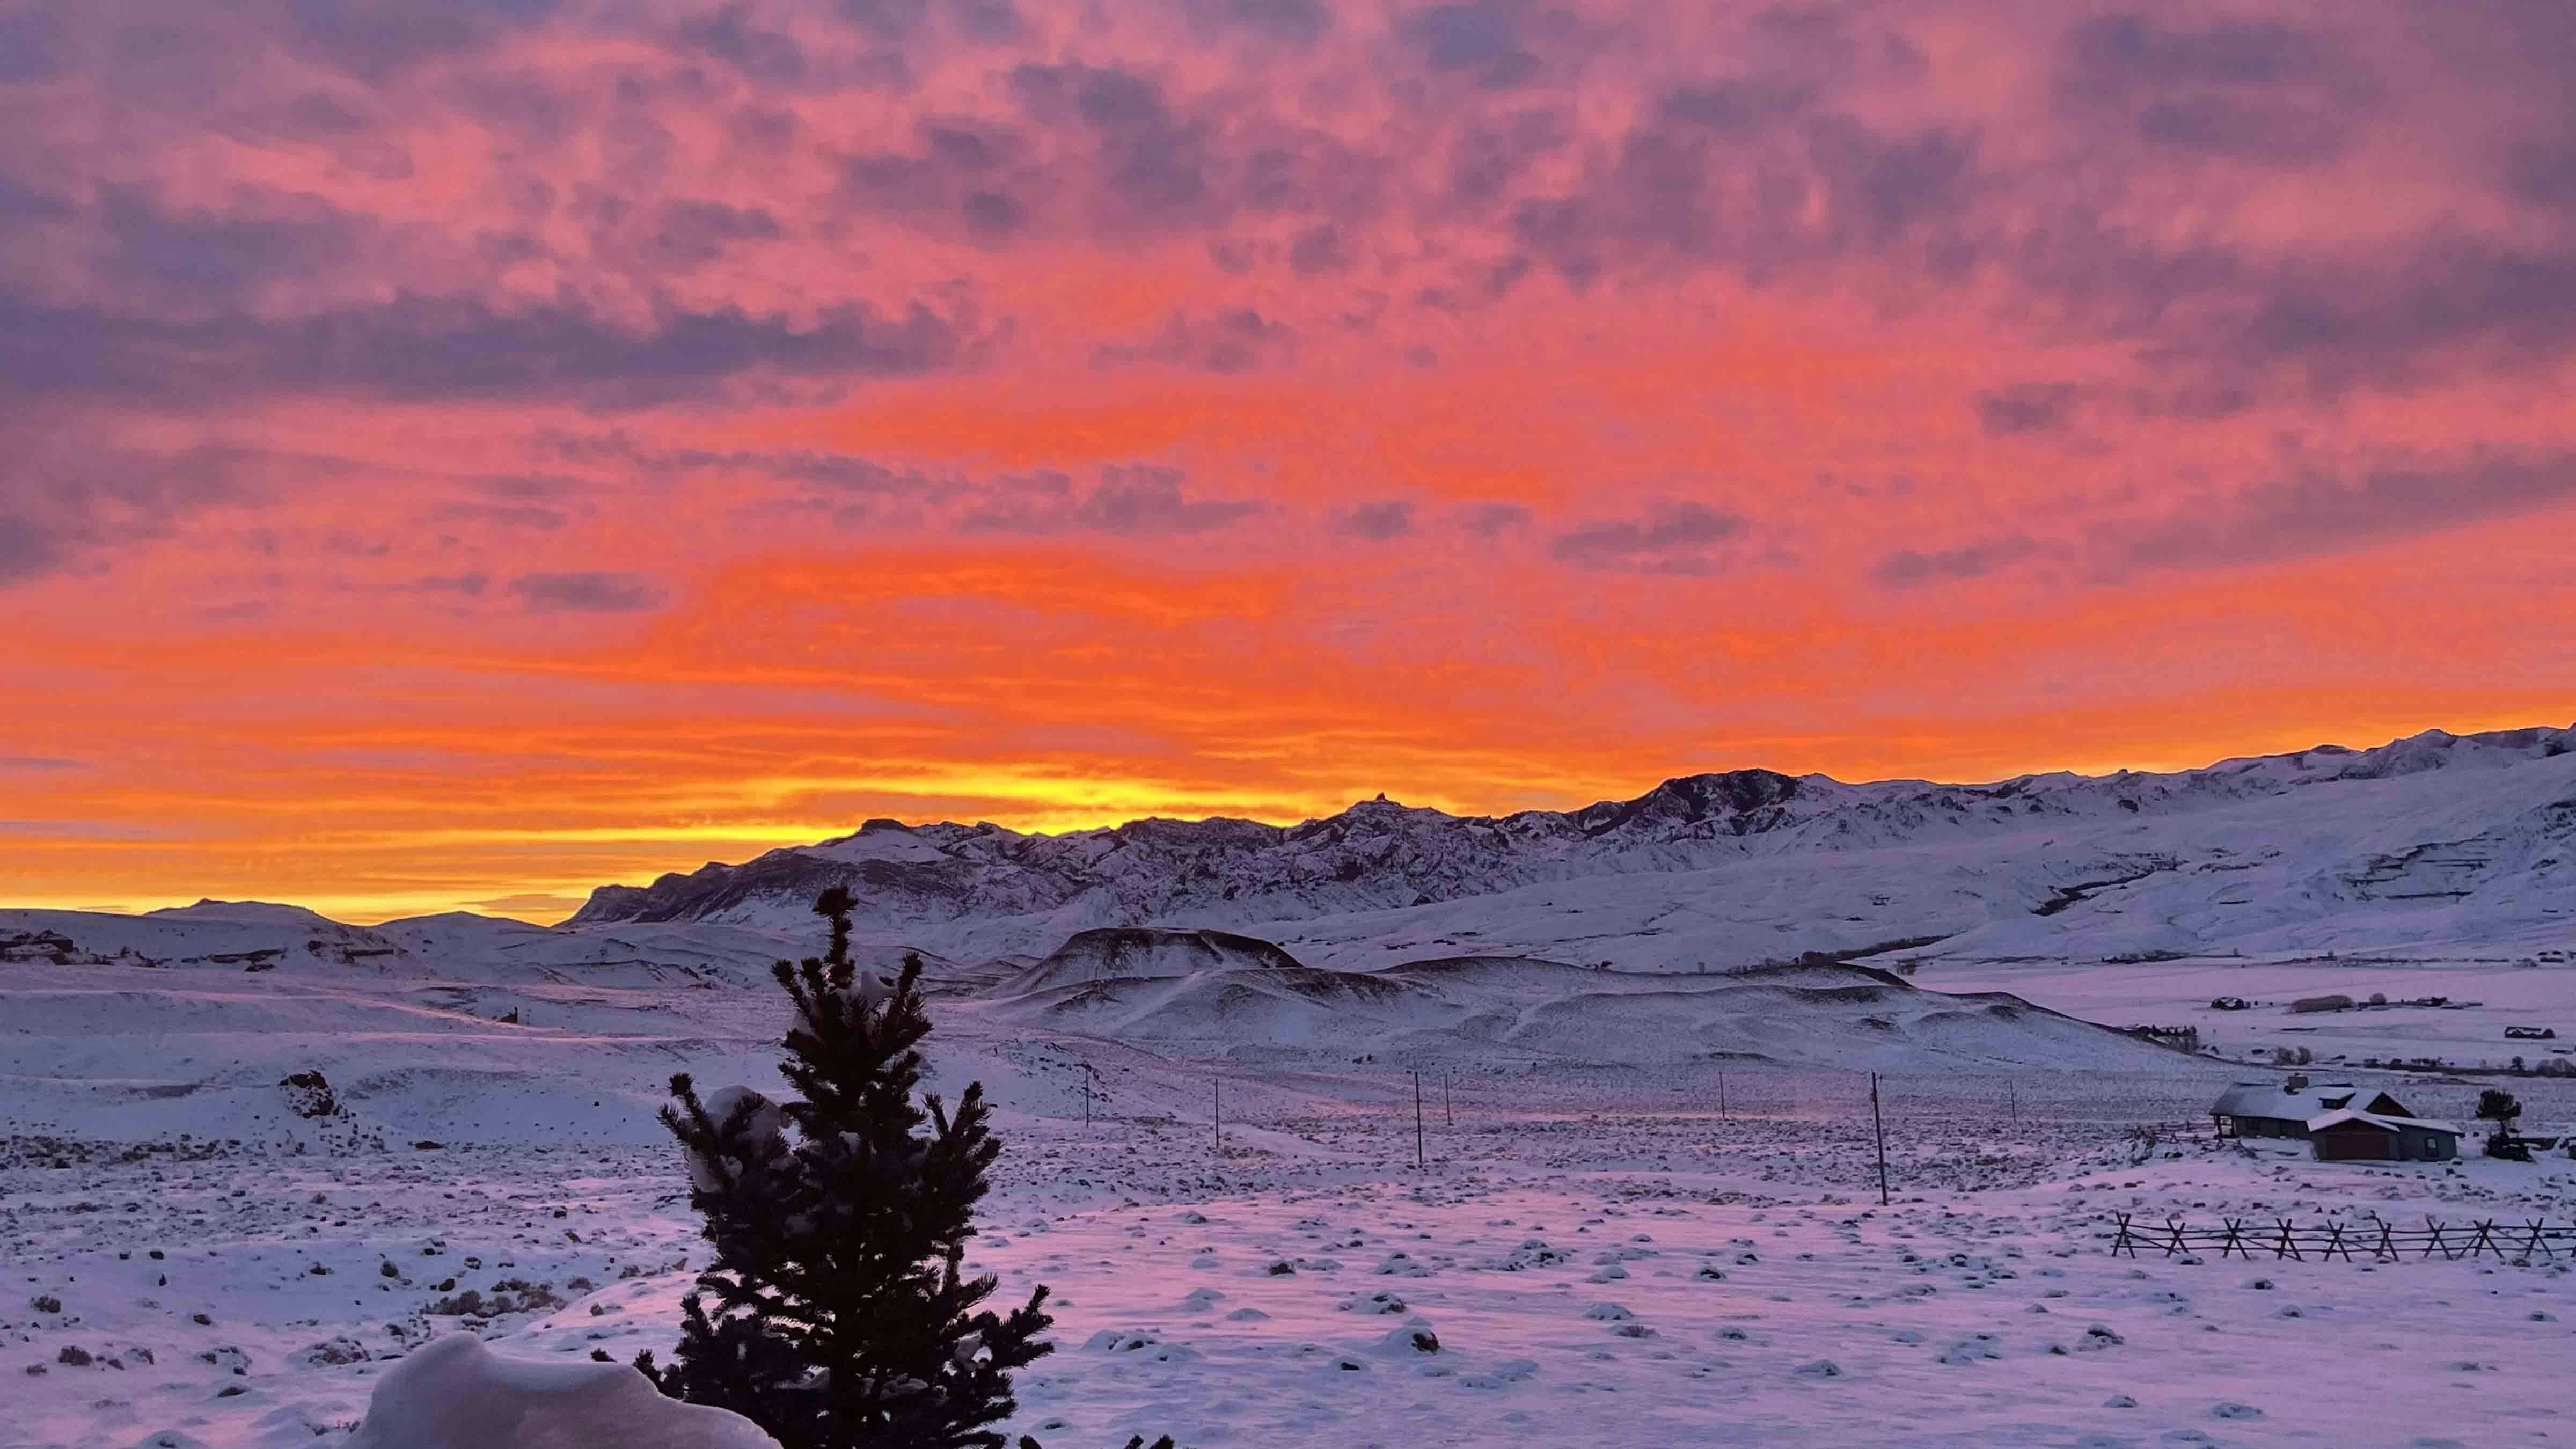 "Woke up to a warm pink glow from this beautiful sunrise in Wapiti, Wyoming."